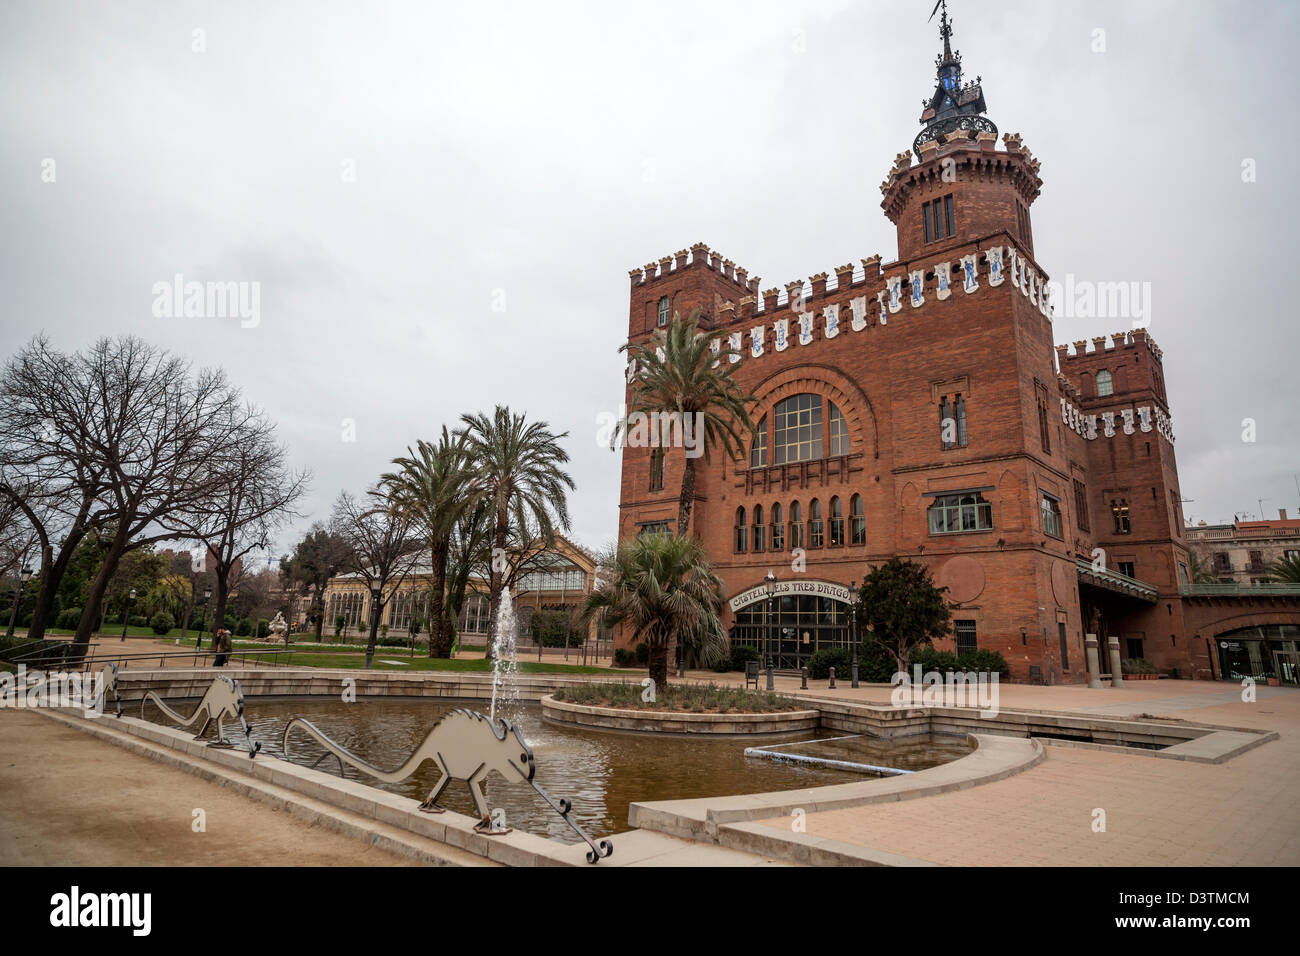 Castle of the three dragons modernisme building in parc ciutadella,Barcelona Stock Photo